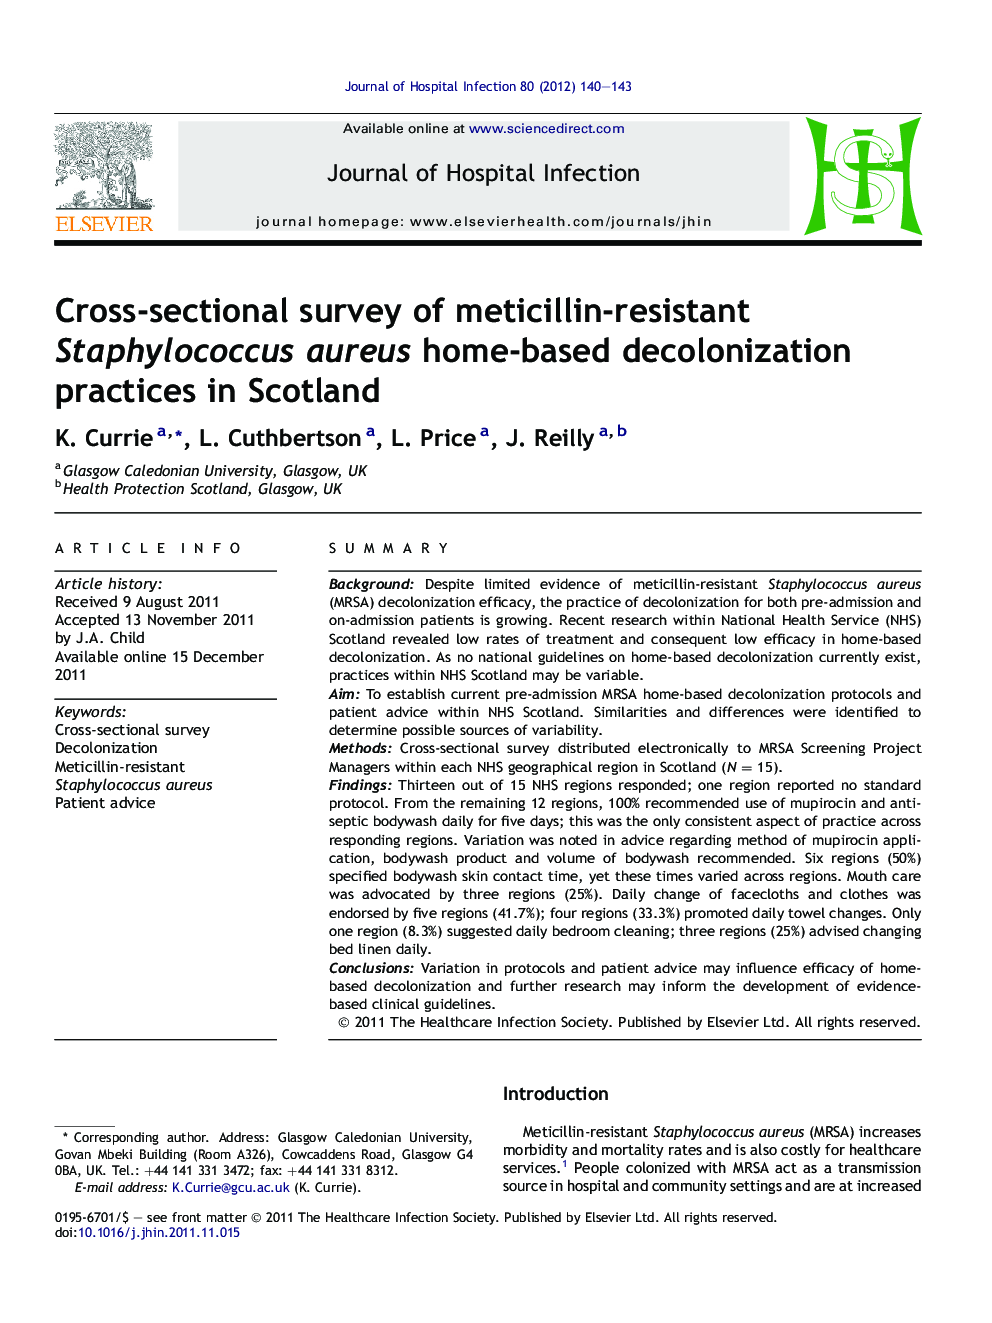 Cross-sectional survey of meticillin-resistant Staphylococcus aureus home-based decolonization practices in Scotland